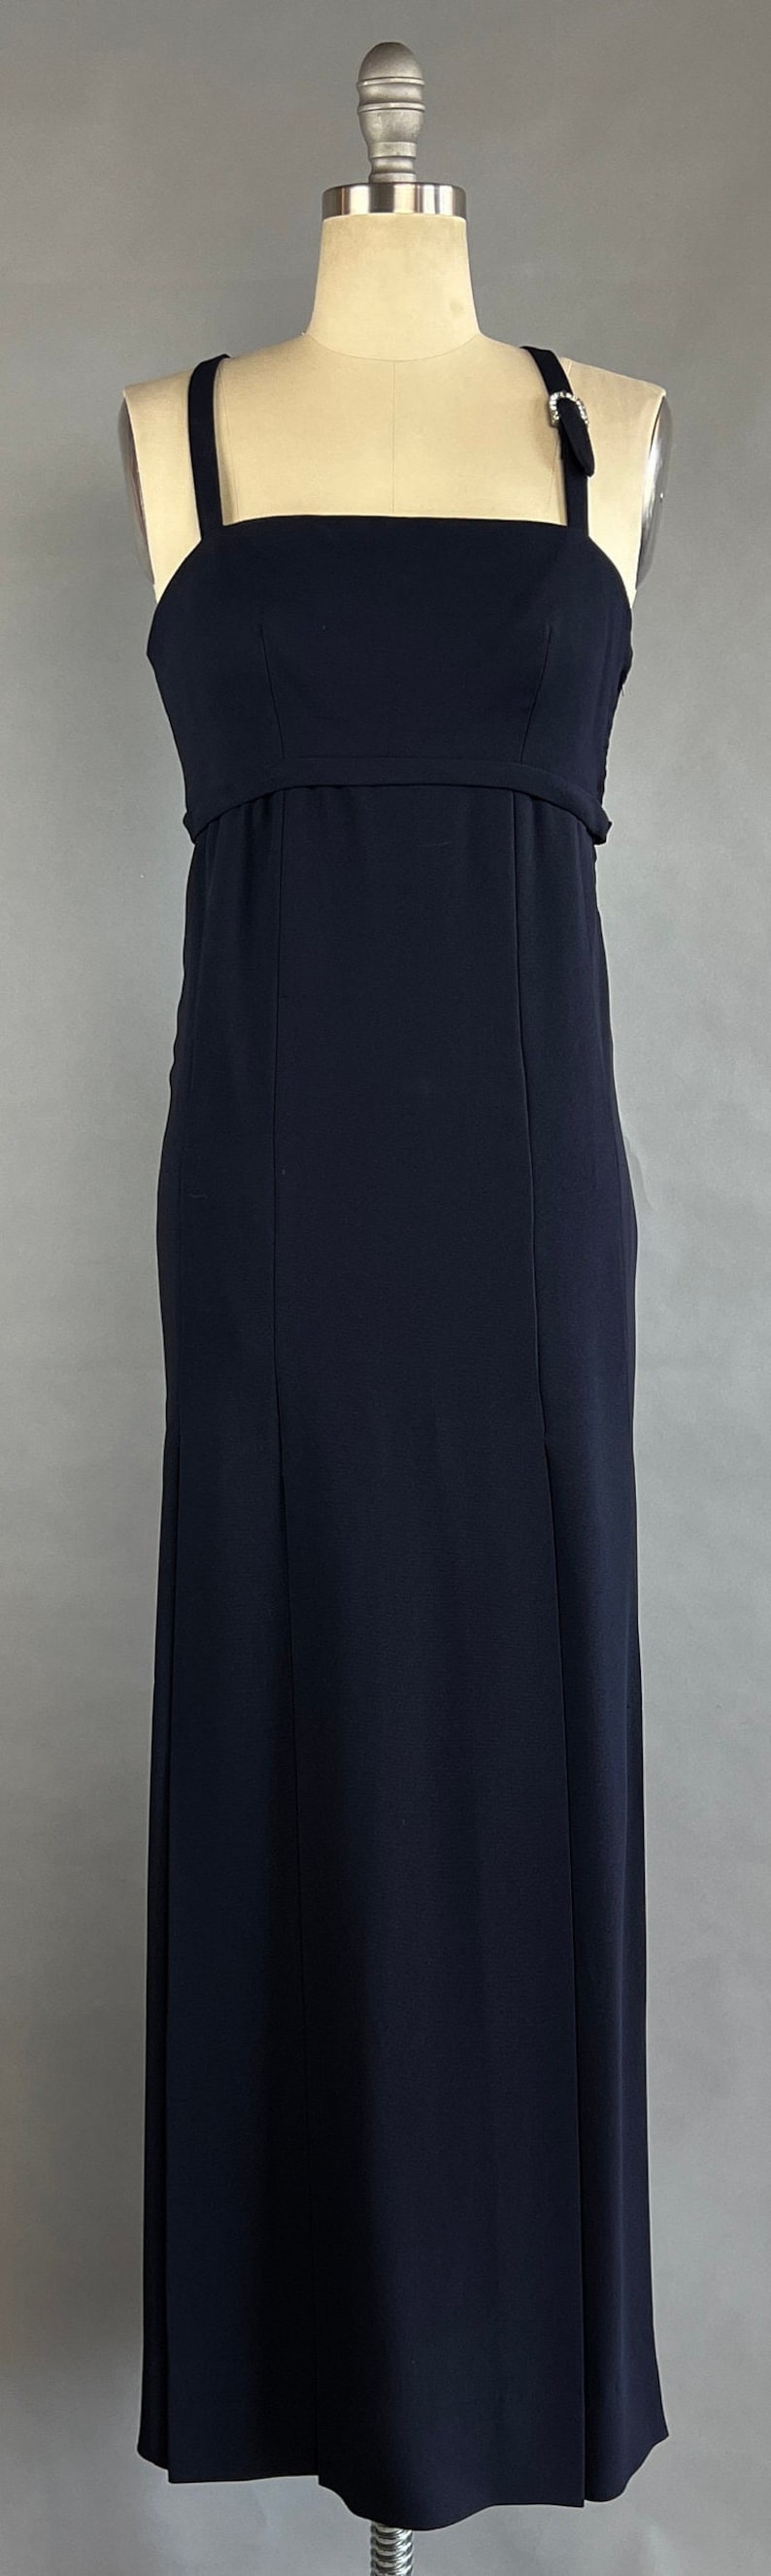 1960s Column Dress / Nina Ricci Navy Blue Silk Crepe Dress with Rhinestone Buckele / Size Small image 9